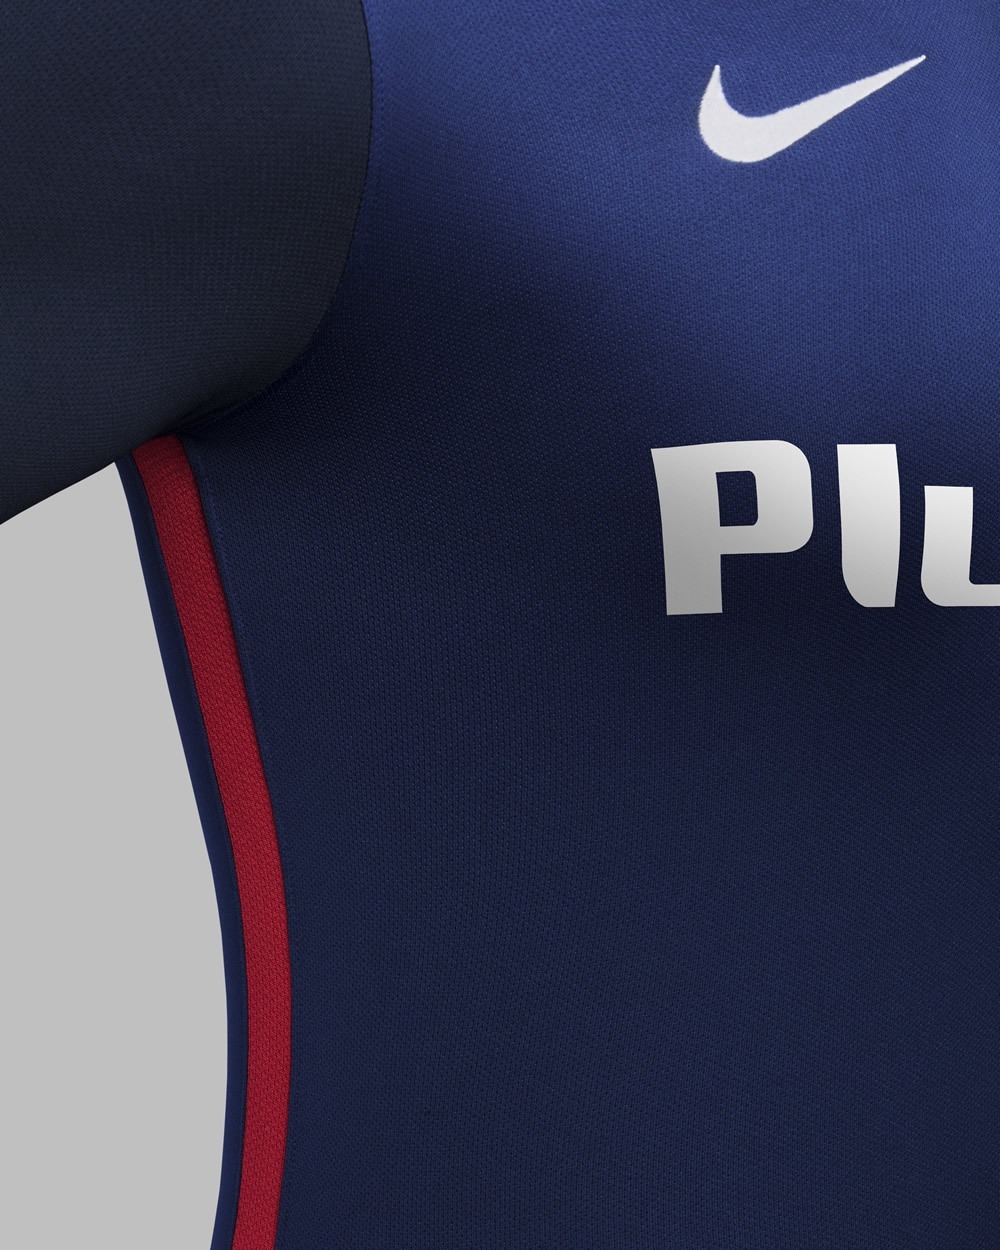 Camiseta suplente Nike del Atlético de Madrid 2015/2016 - Planeta Fobal